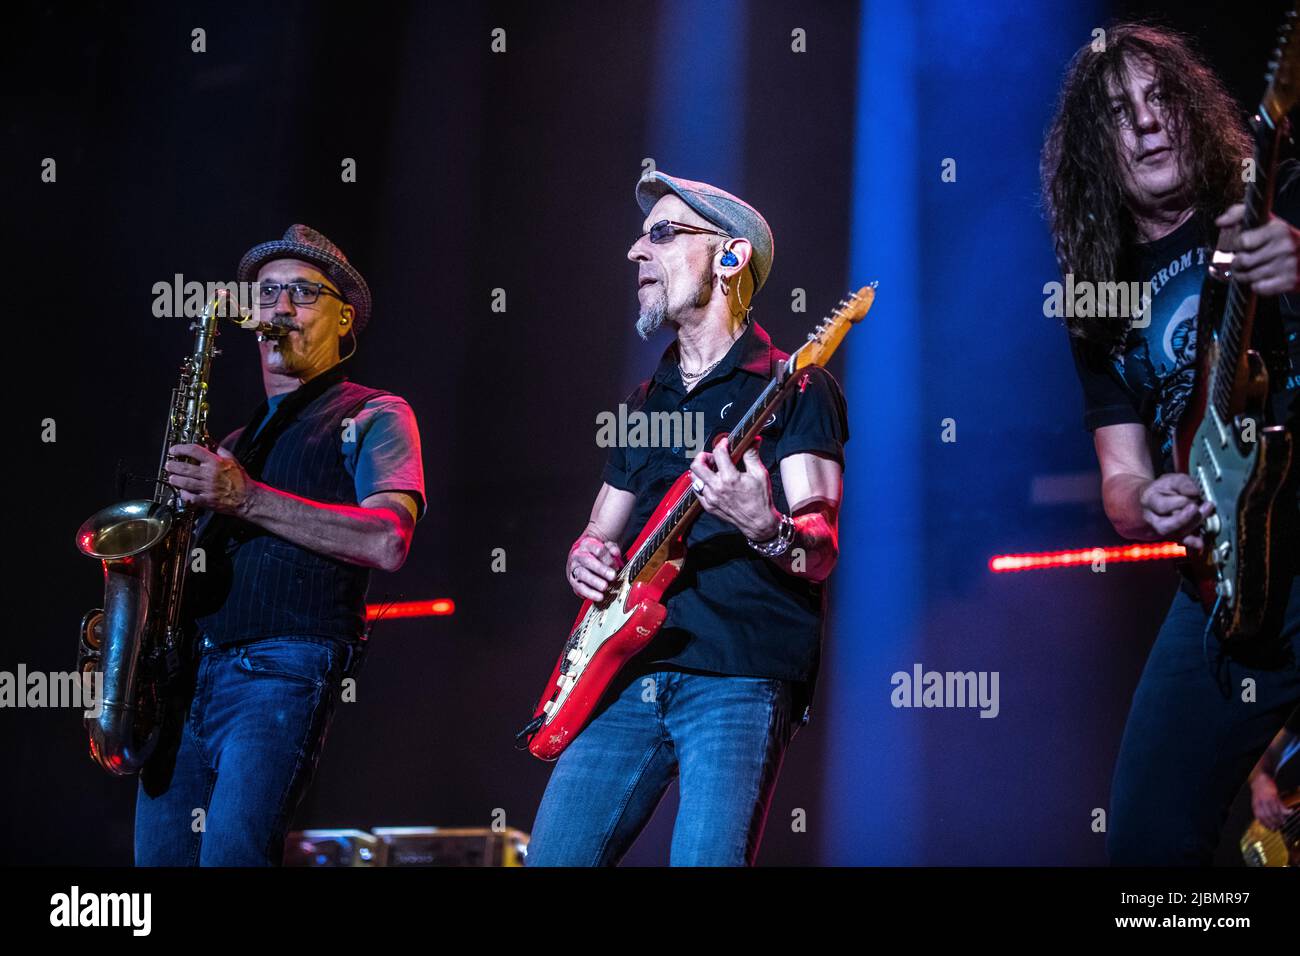 Fito & Fitipaldis performing at Palau Sant Jordi, Barcelona 04 Jun. 2022. Photographer: Ale Espaliat Stock Photo